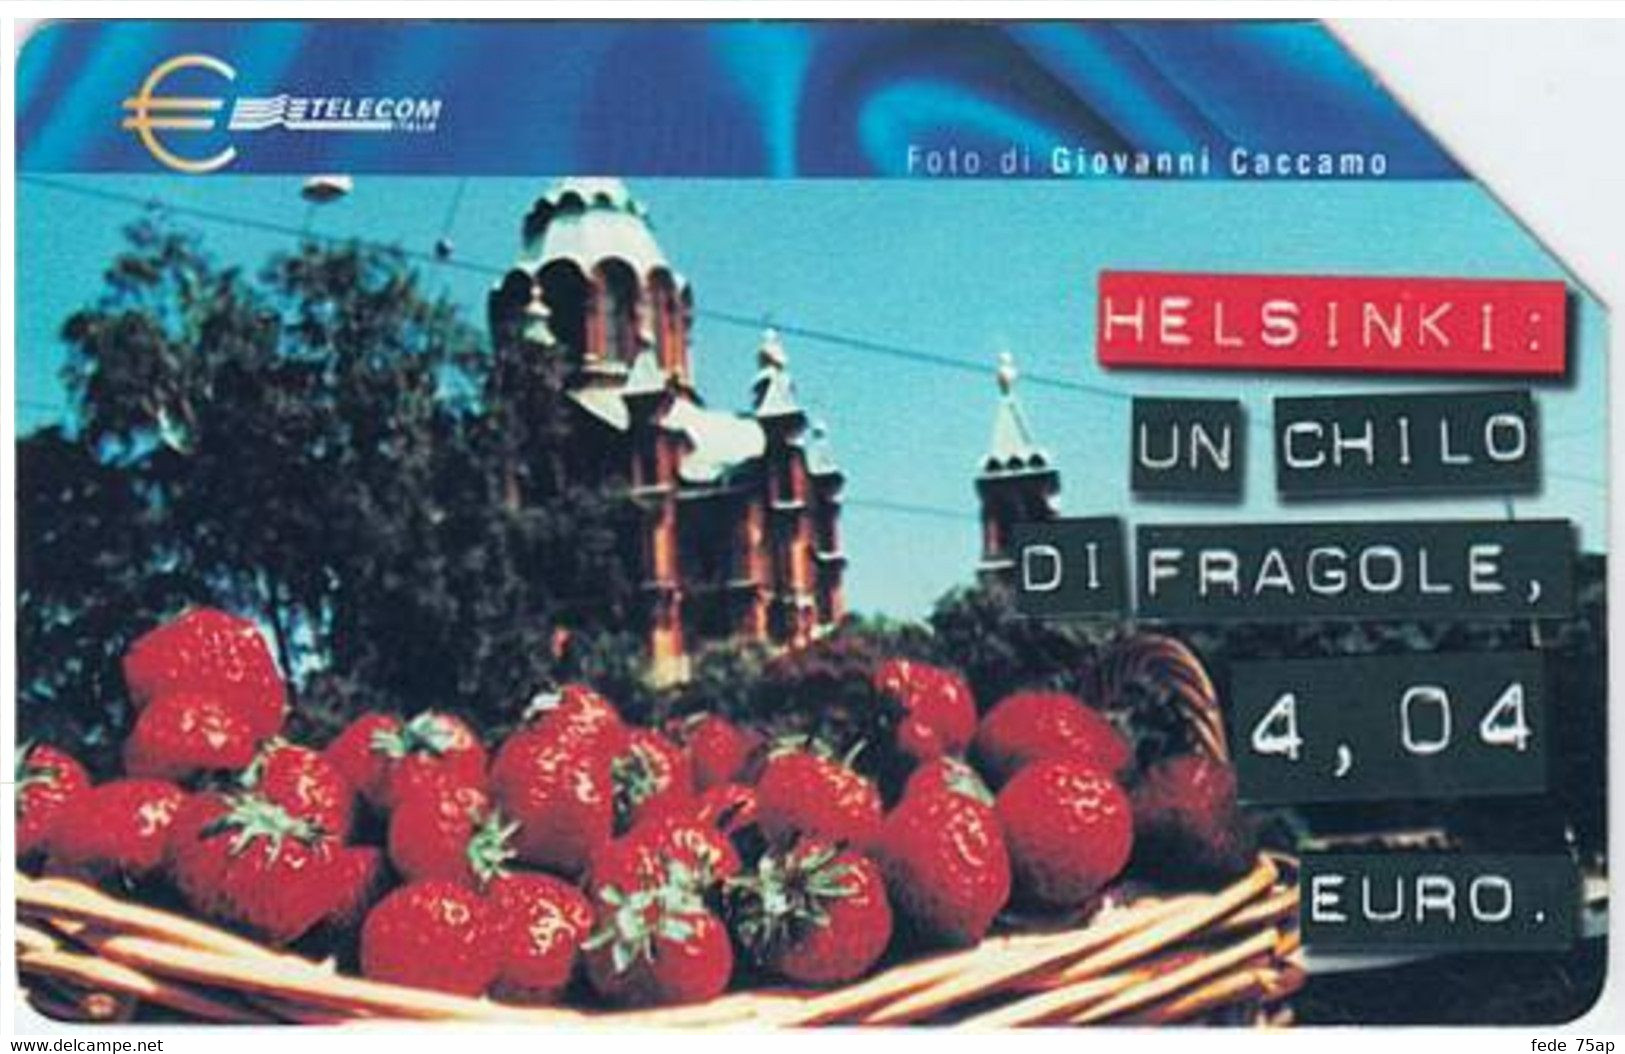 Scheda Telefonica TELECOM ITALIA "EURO - HELSINKI" - Catalogo Golden Lira Nr. 1089, Usata - Lebensmittel